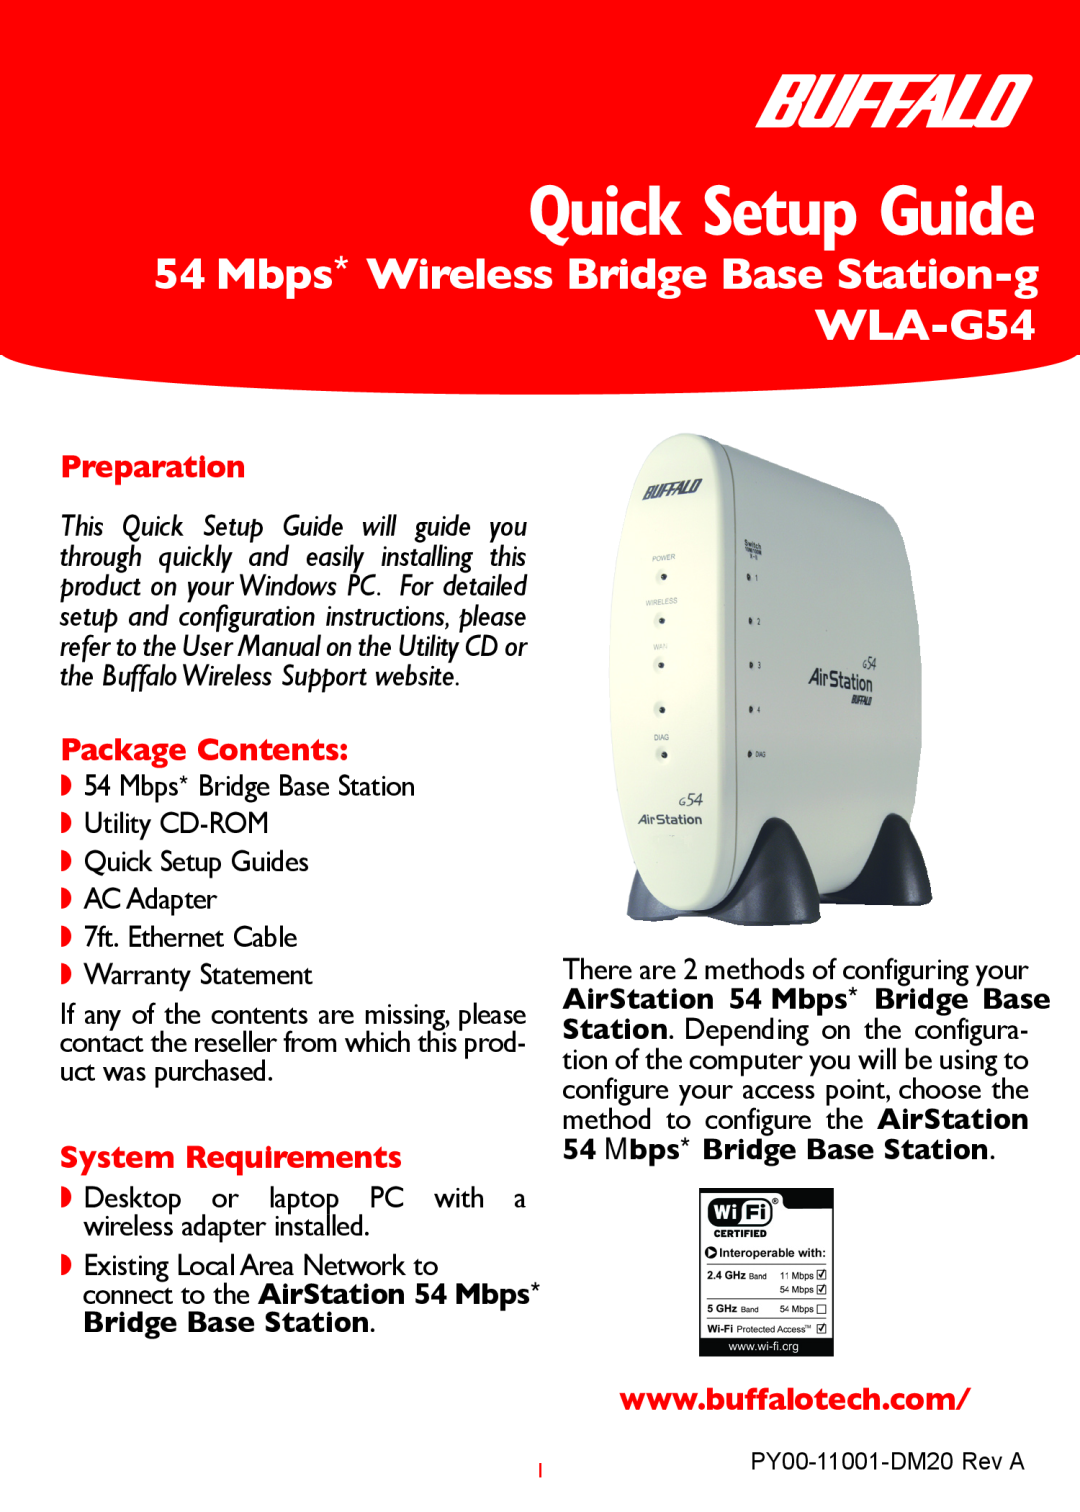 Buffalo Technology setup guide 54Mbps Wireless Bridge Base Station-g WLA-G54, Preparation, Package Contents 